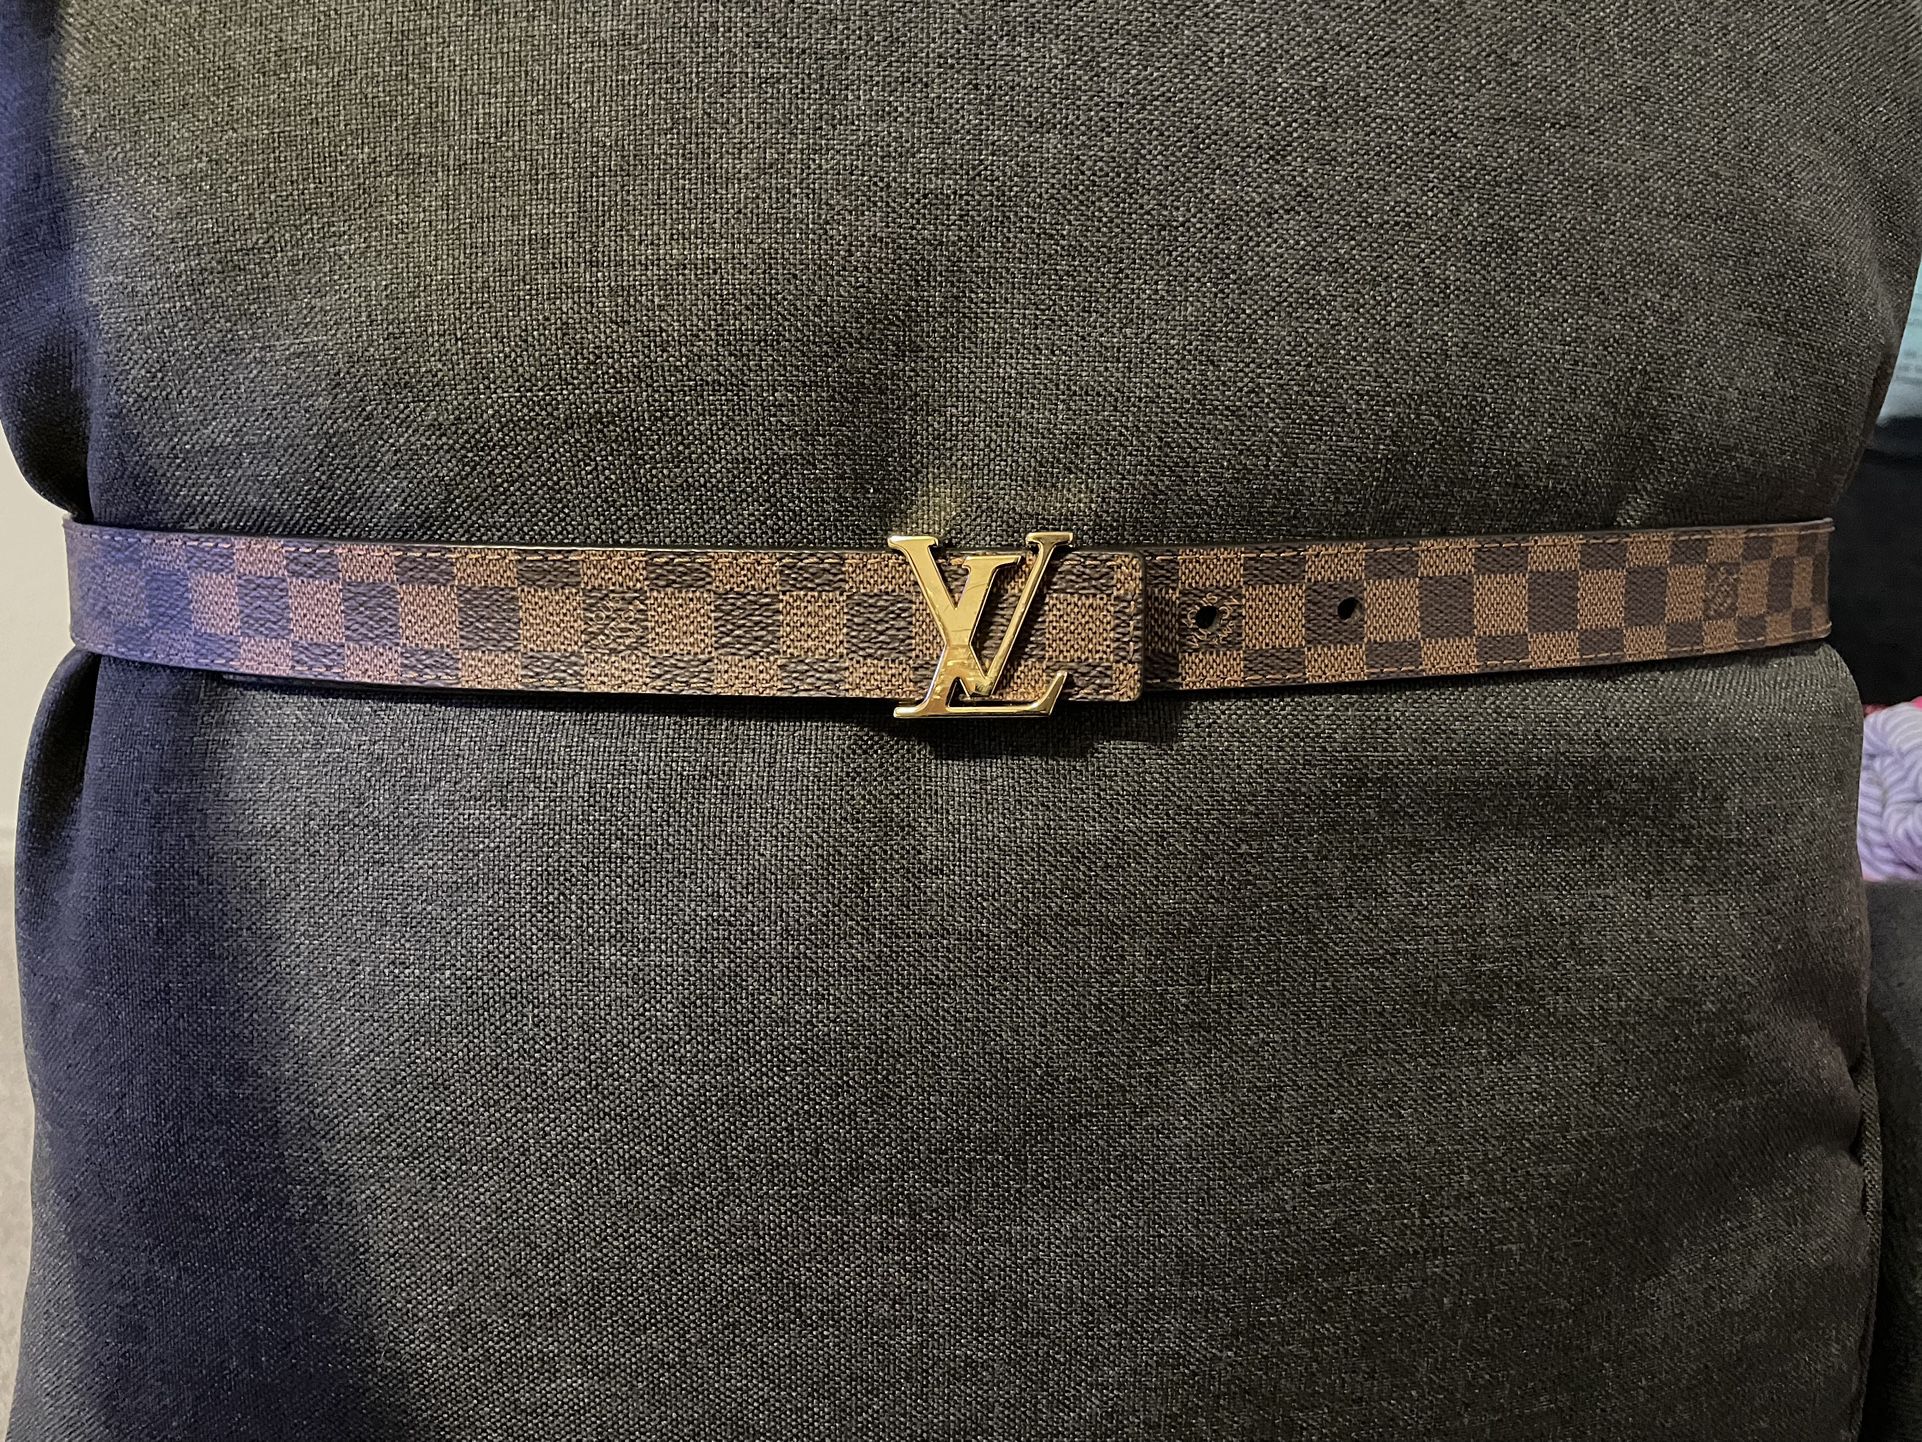 Black Louis Vuitton Belt for Sale in San Antonio, TX - OfferUp